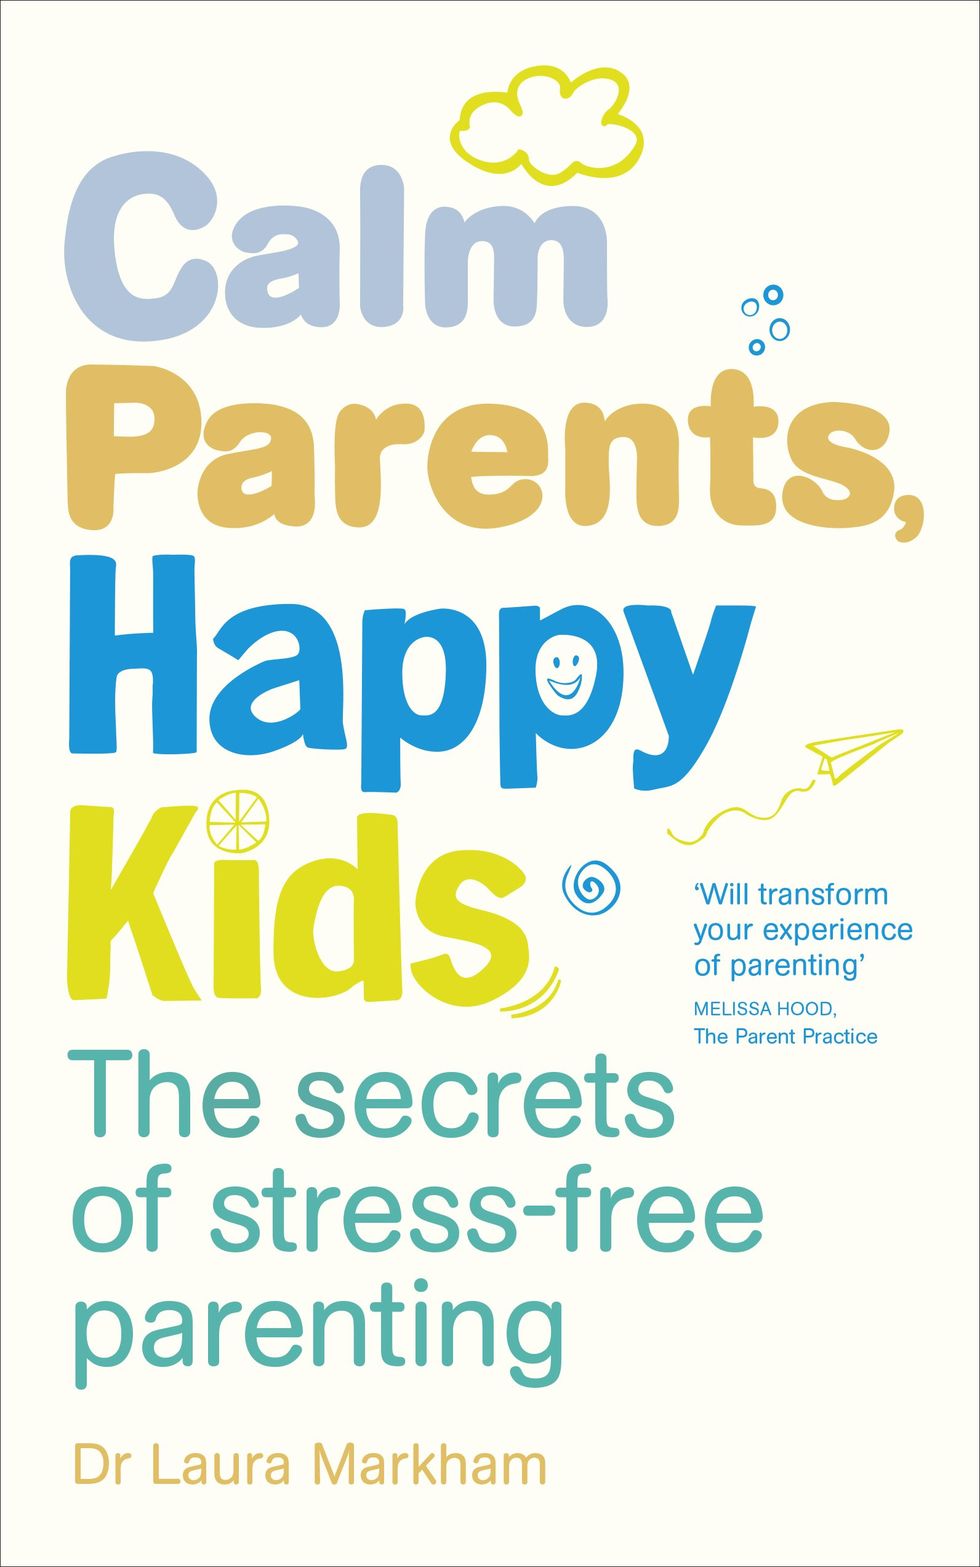 Calm Parents, Happy Kids: The Secrets of Stress-free Parenting by Dr Laura Markham